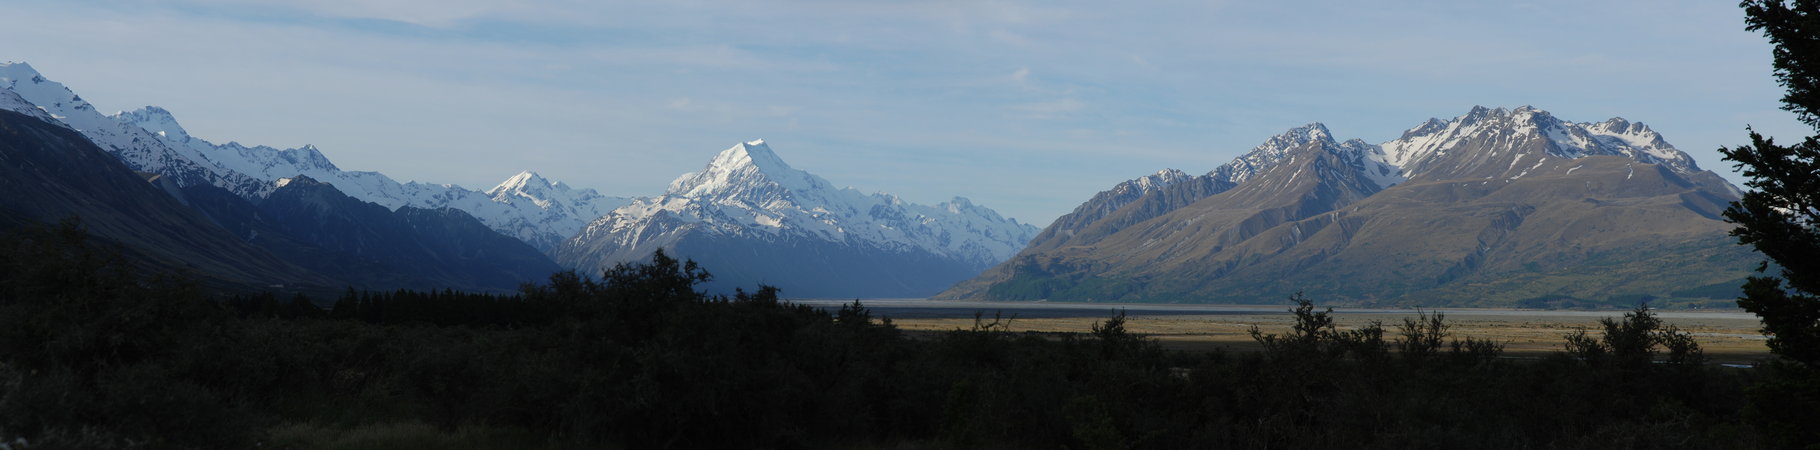 Mt Cook Panorama